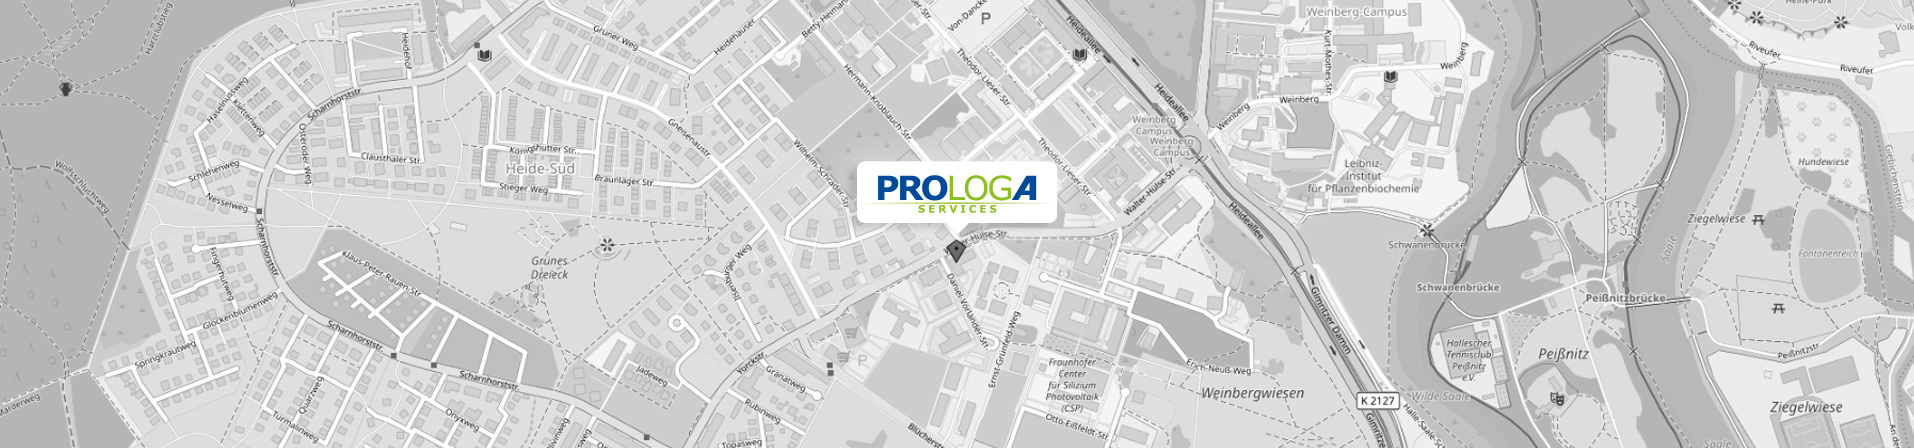 PROLOGA Services Karte